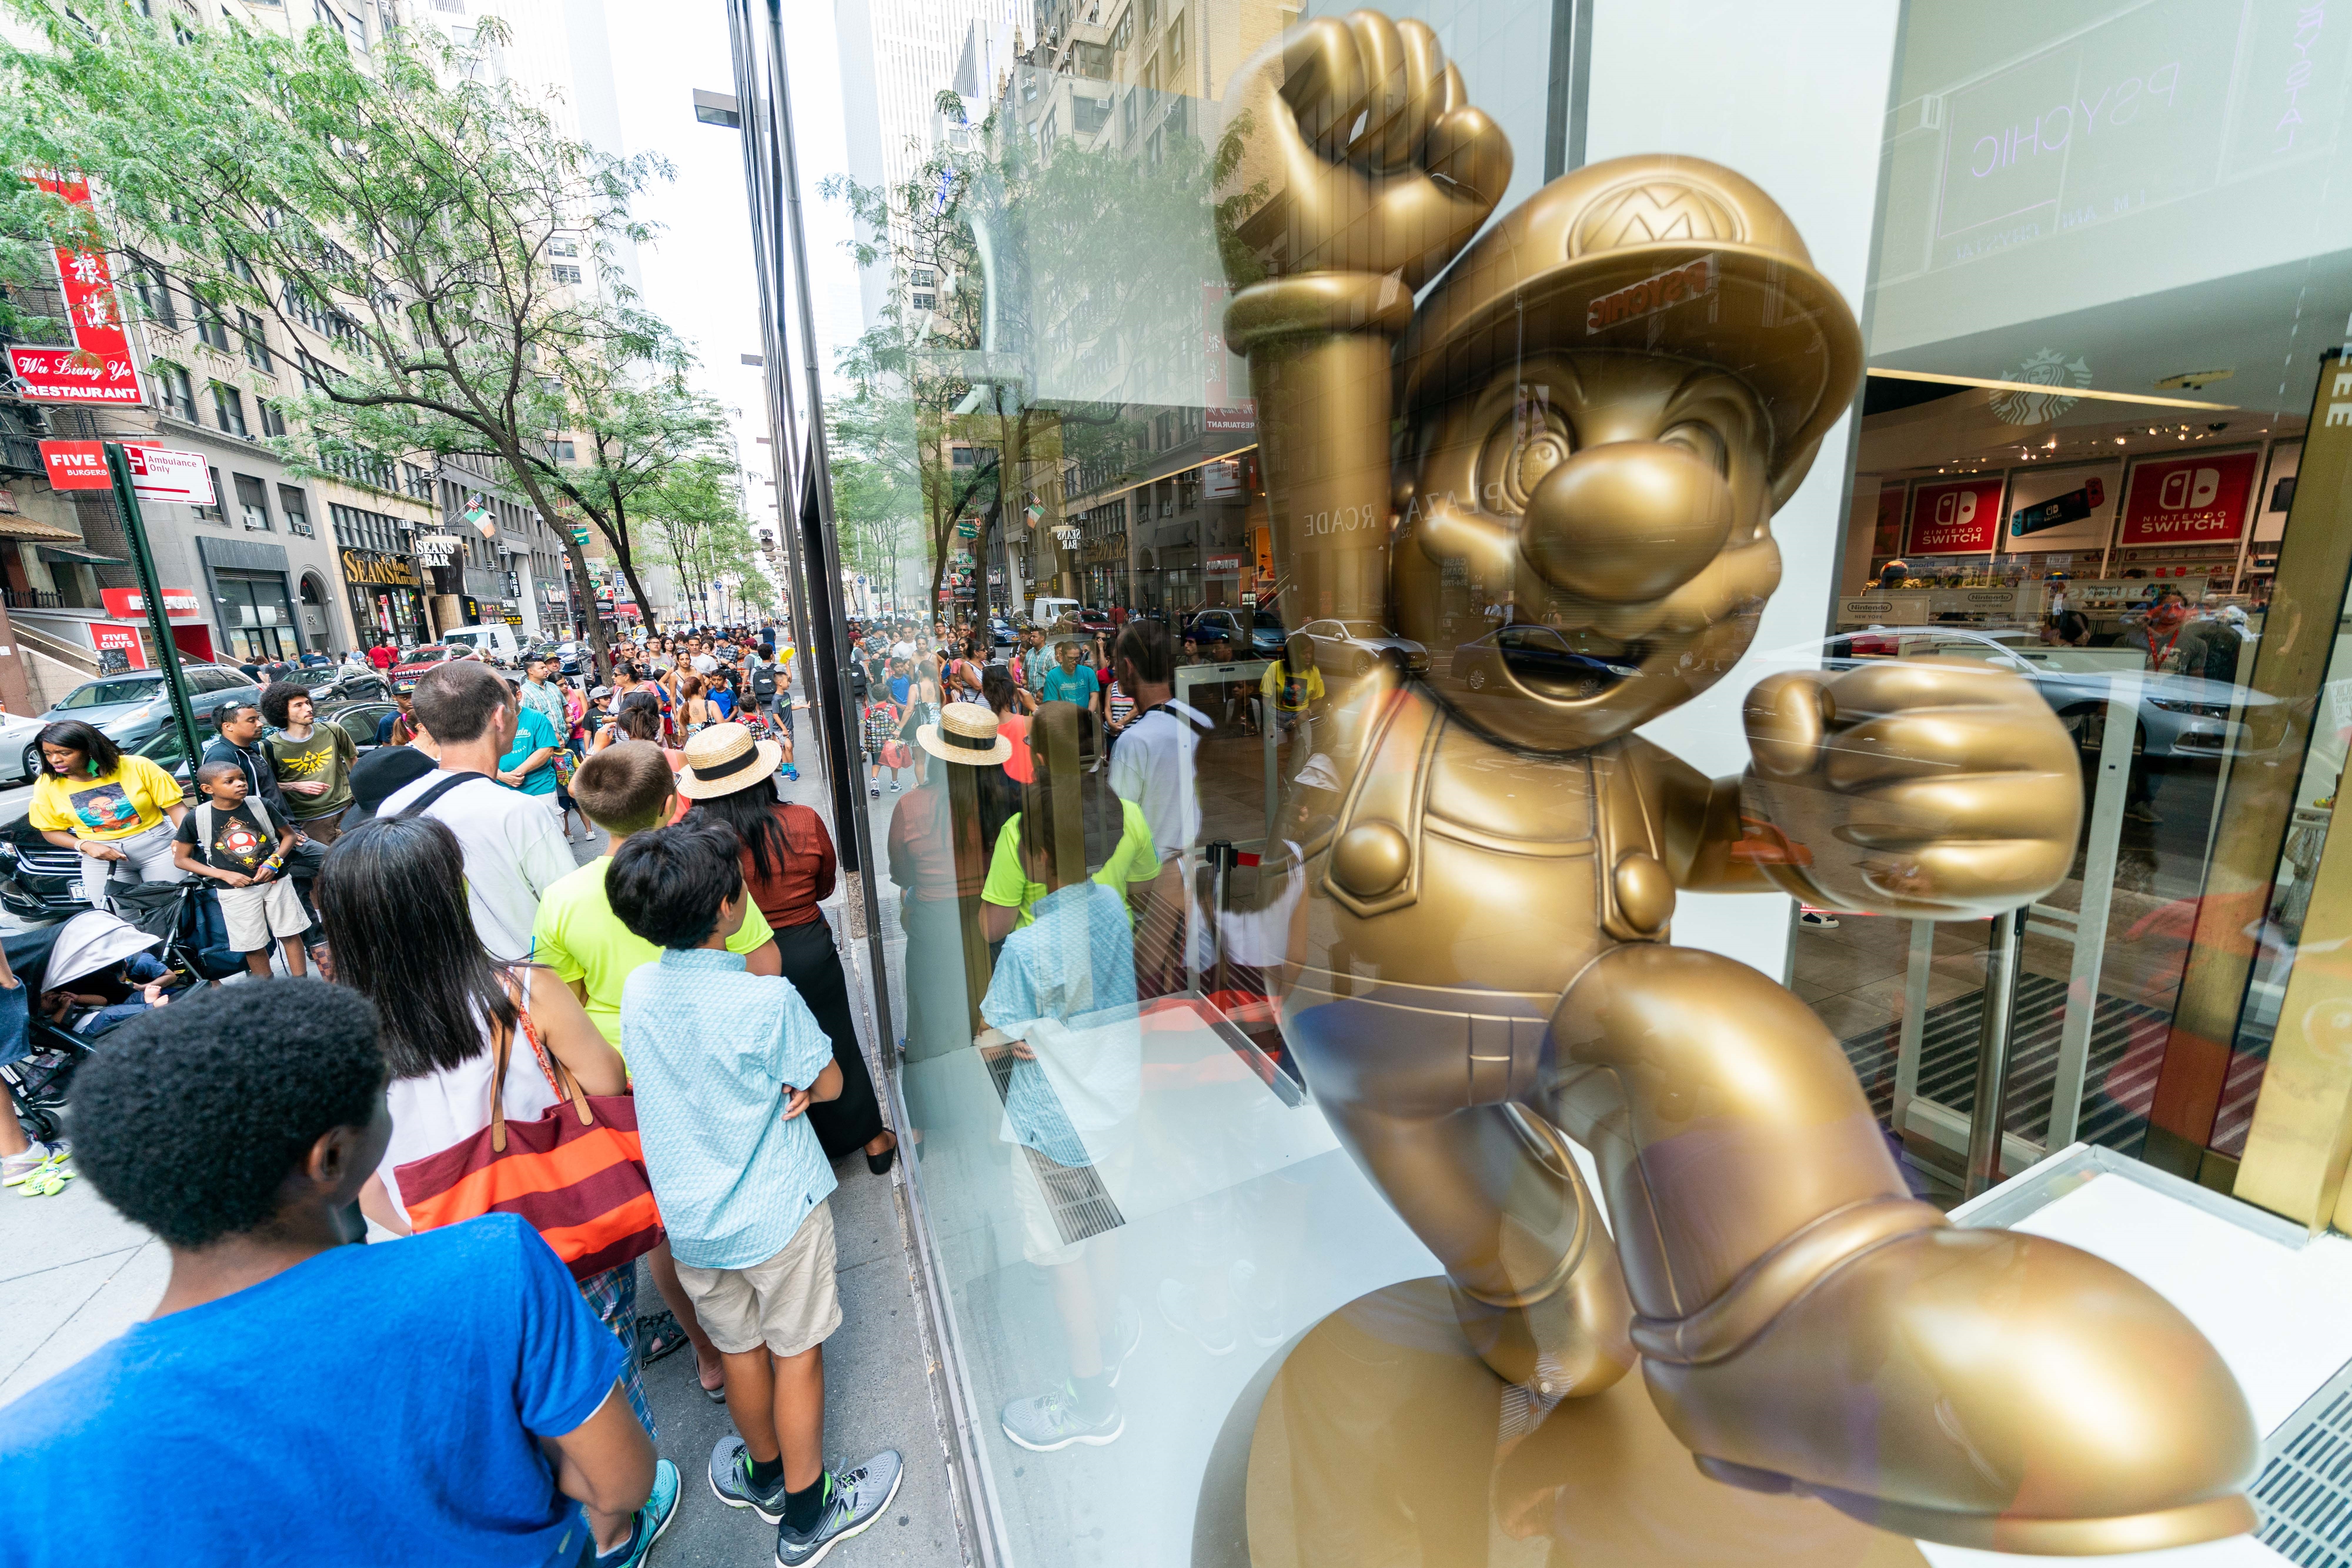 Nintendo Store - Picture of Nintendo New York, New York City